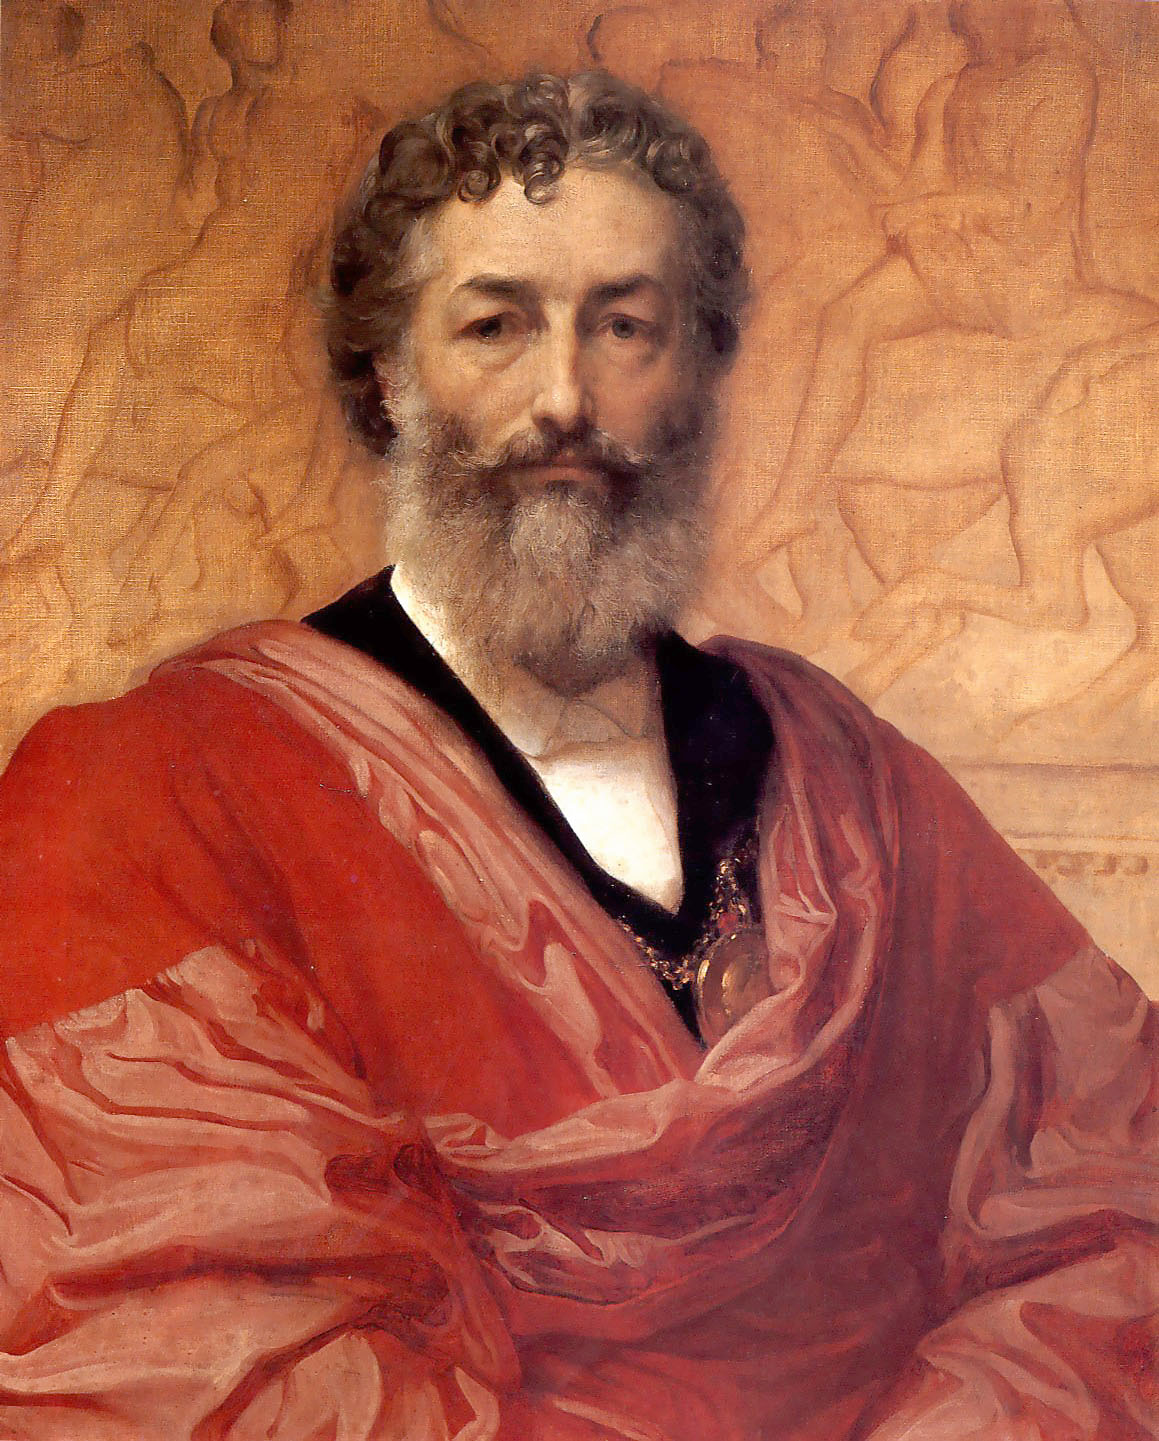 https://upload.wikimedia.org/wikipedia/commons/f/f3/1880_Frederic_Leighton_-_Self_portrait.jpg